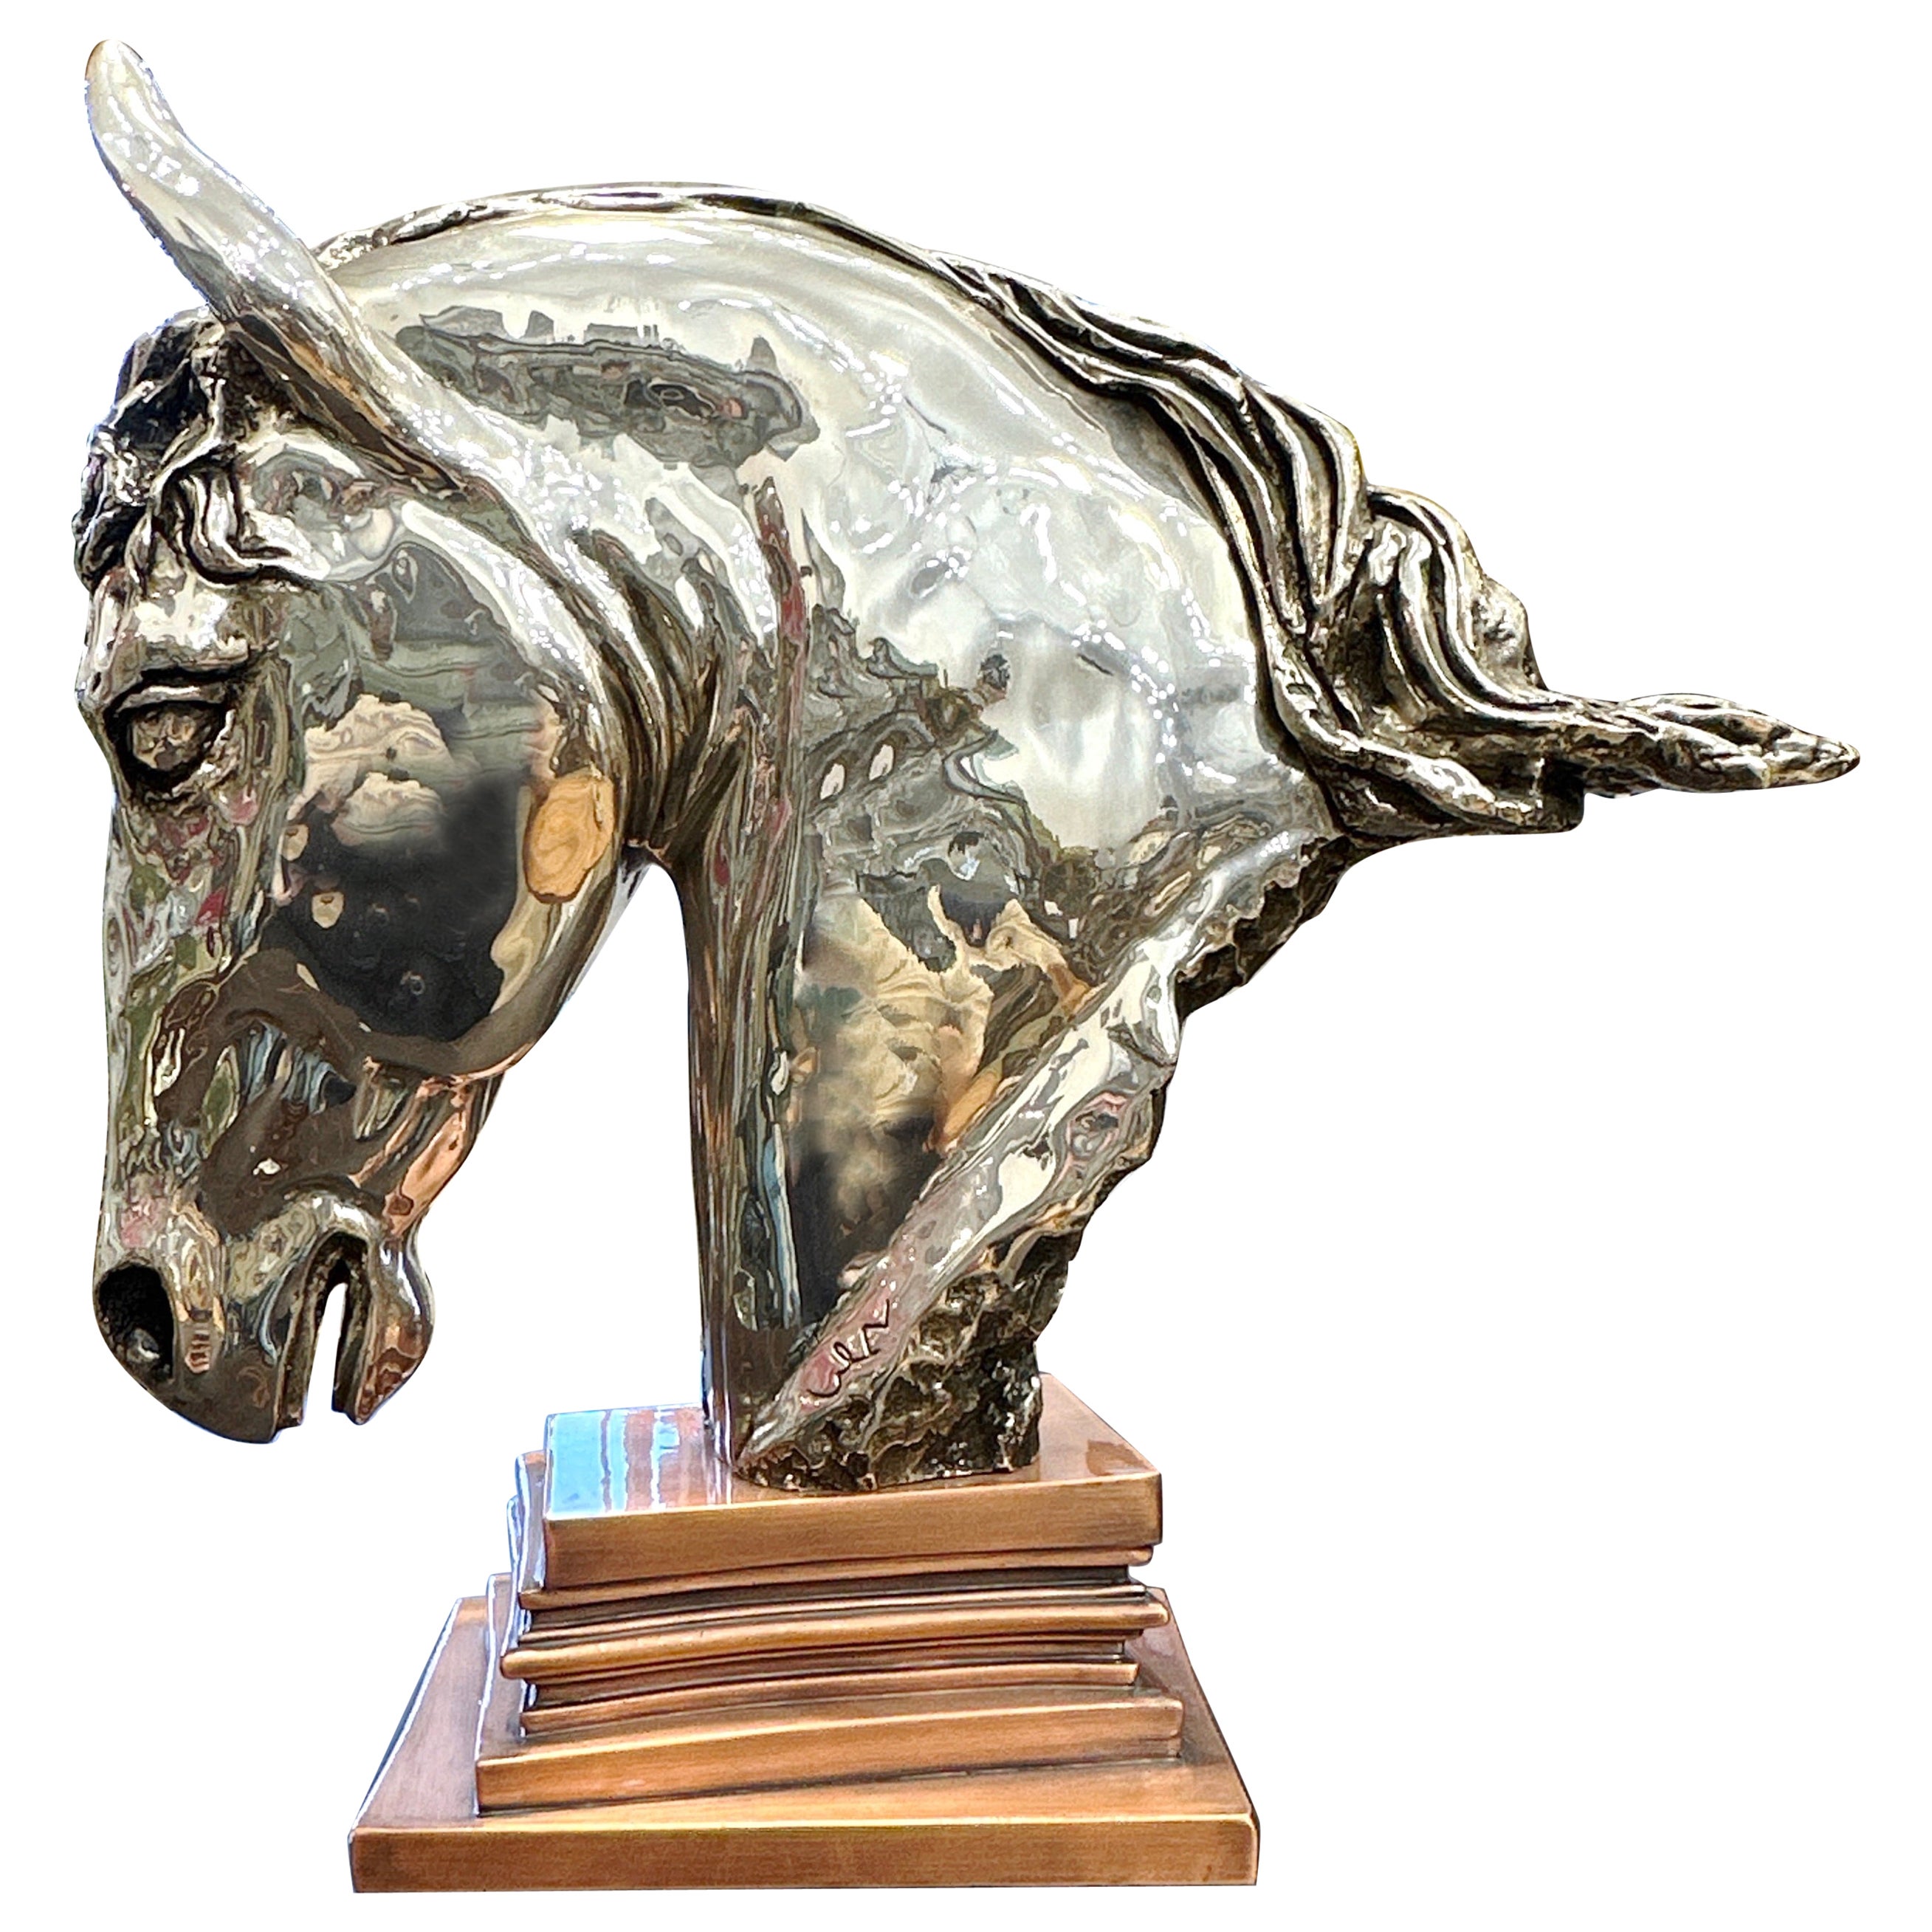 Ricardo Del Rio (1961 -) Mexico City. Large Silver Plated Horse Head Sculpture For Sale